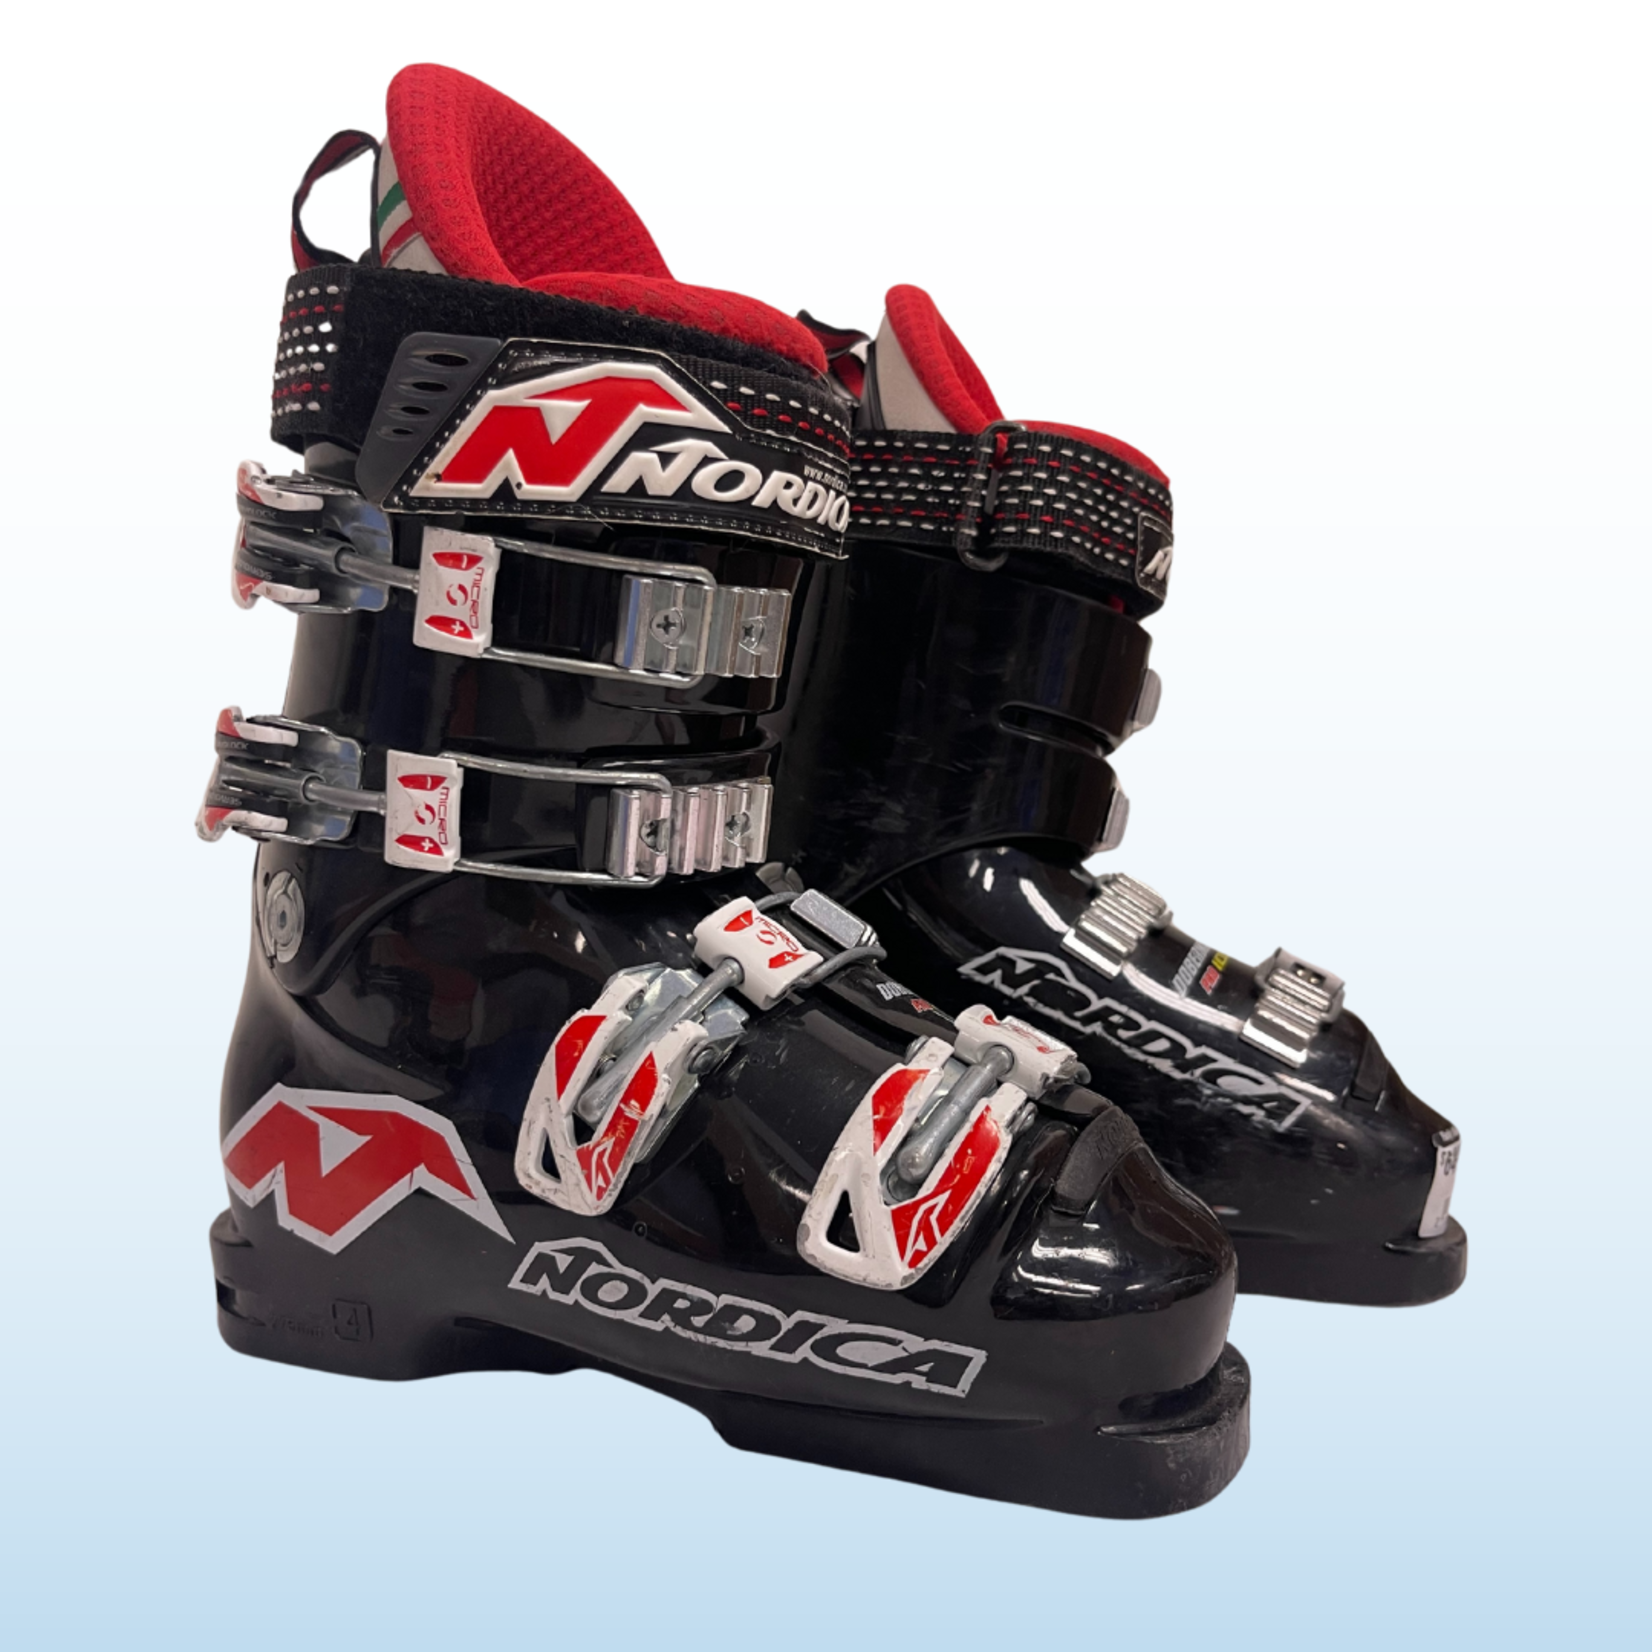 Nordica Nordica Doberman Kids Ski Boots Size 22/22.5